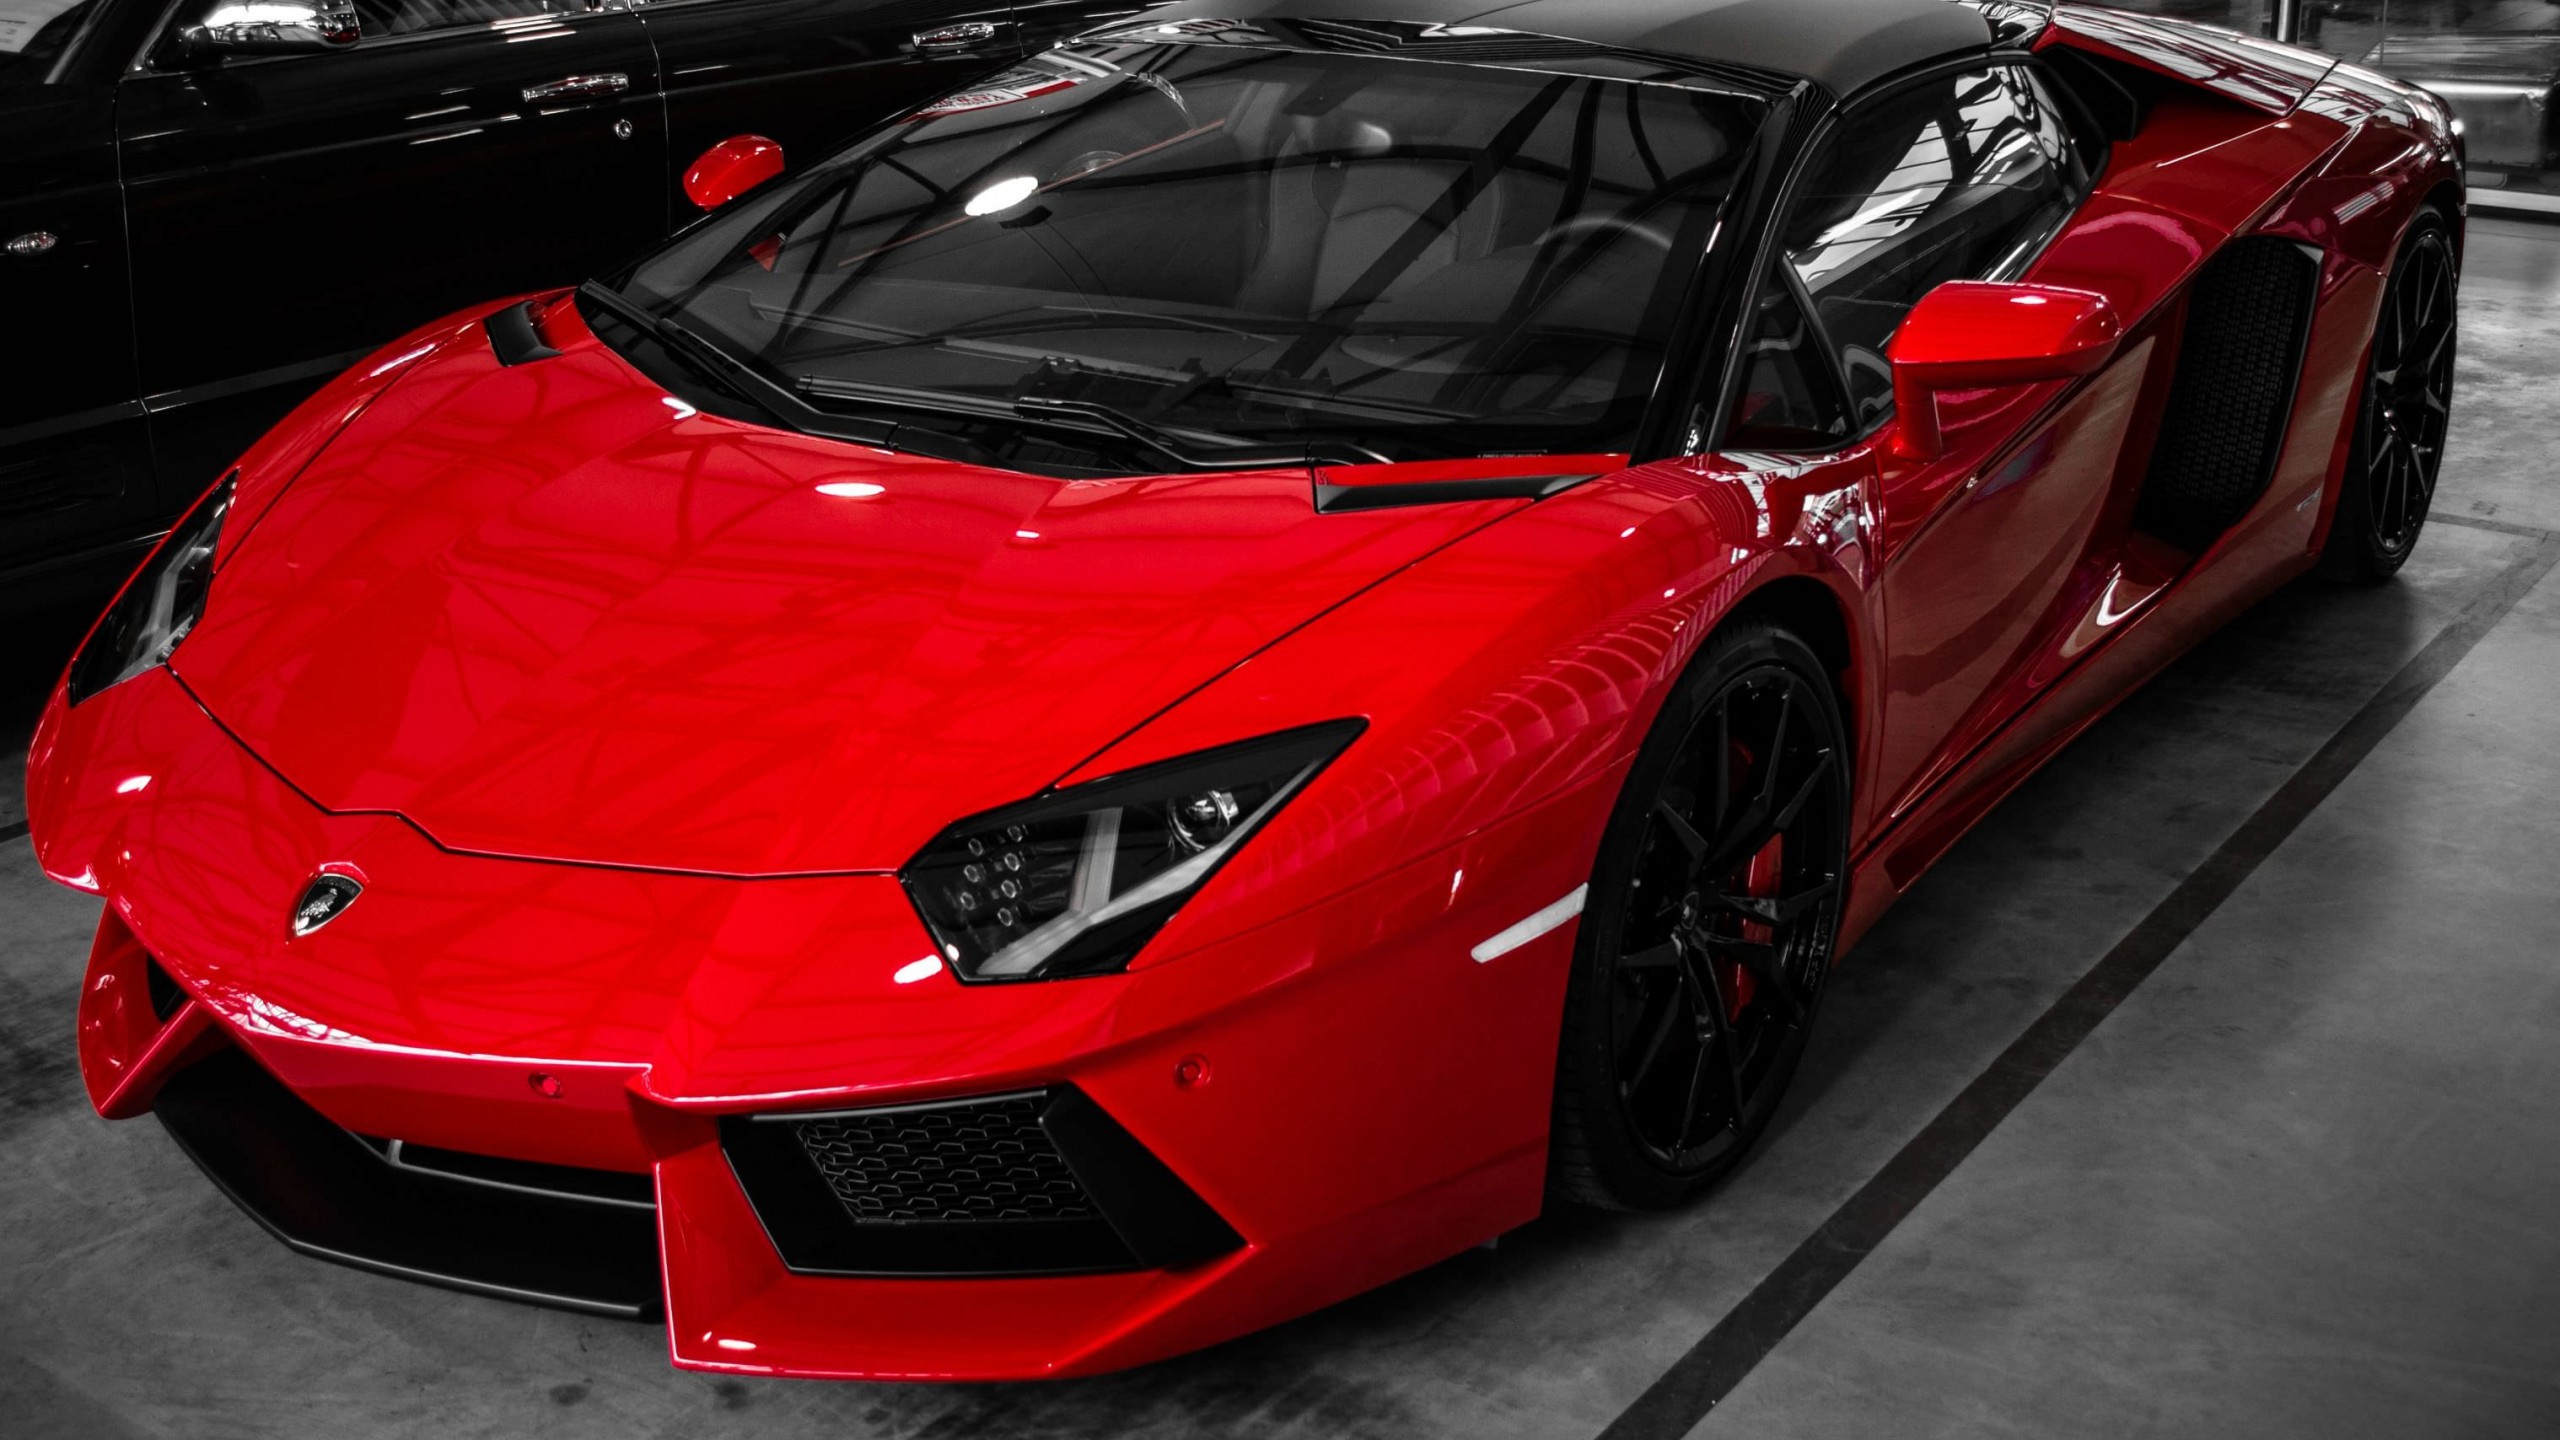 Red Lamborghini Aventador Wallpaper for Desktop 2560x1440